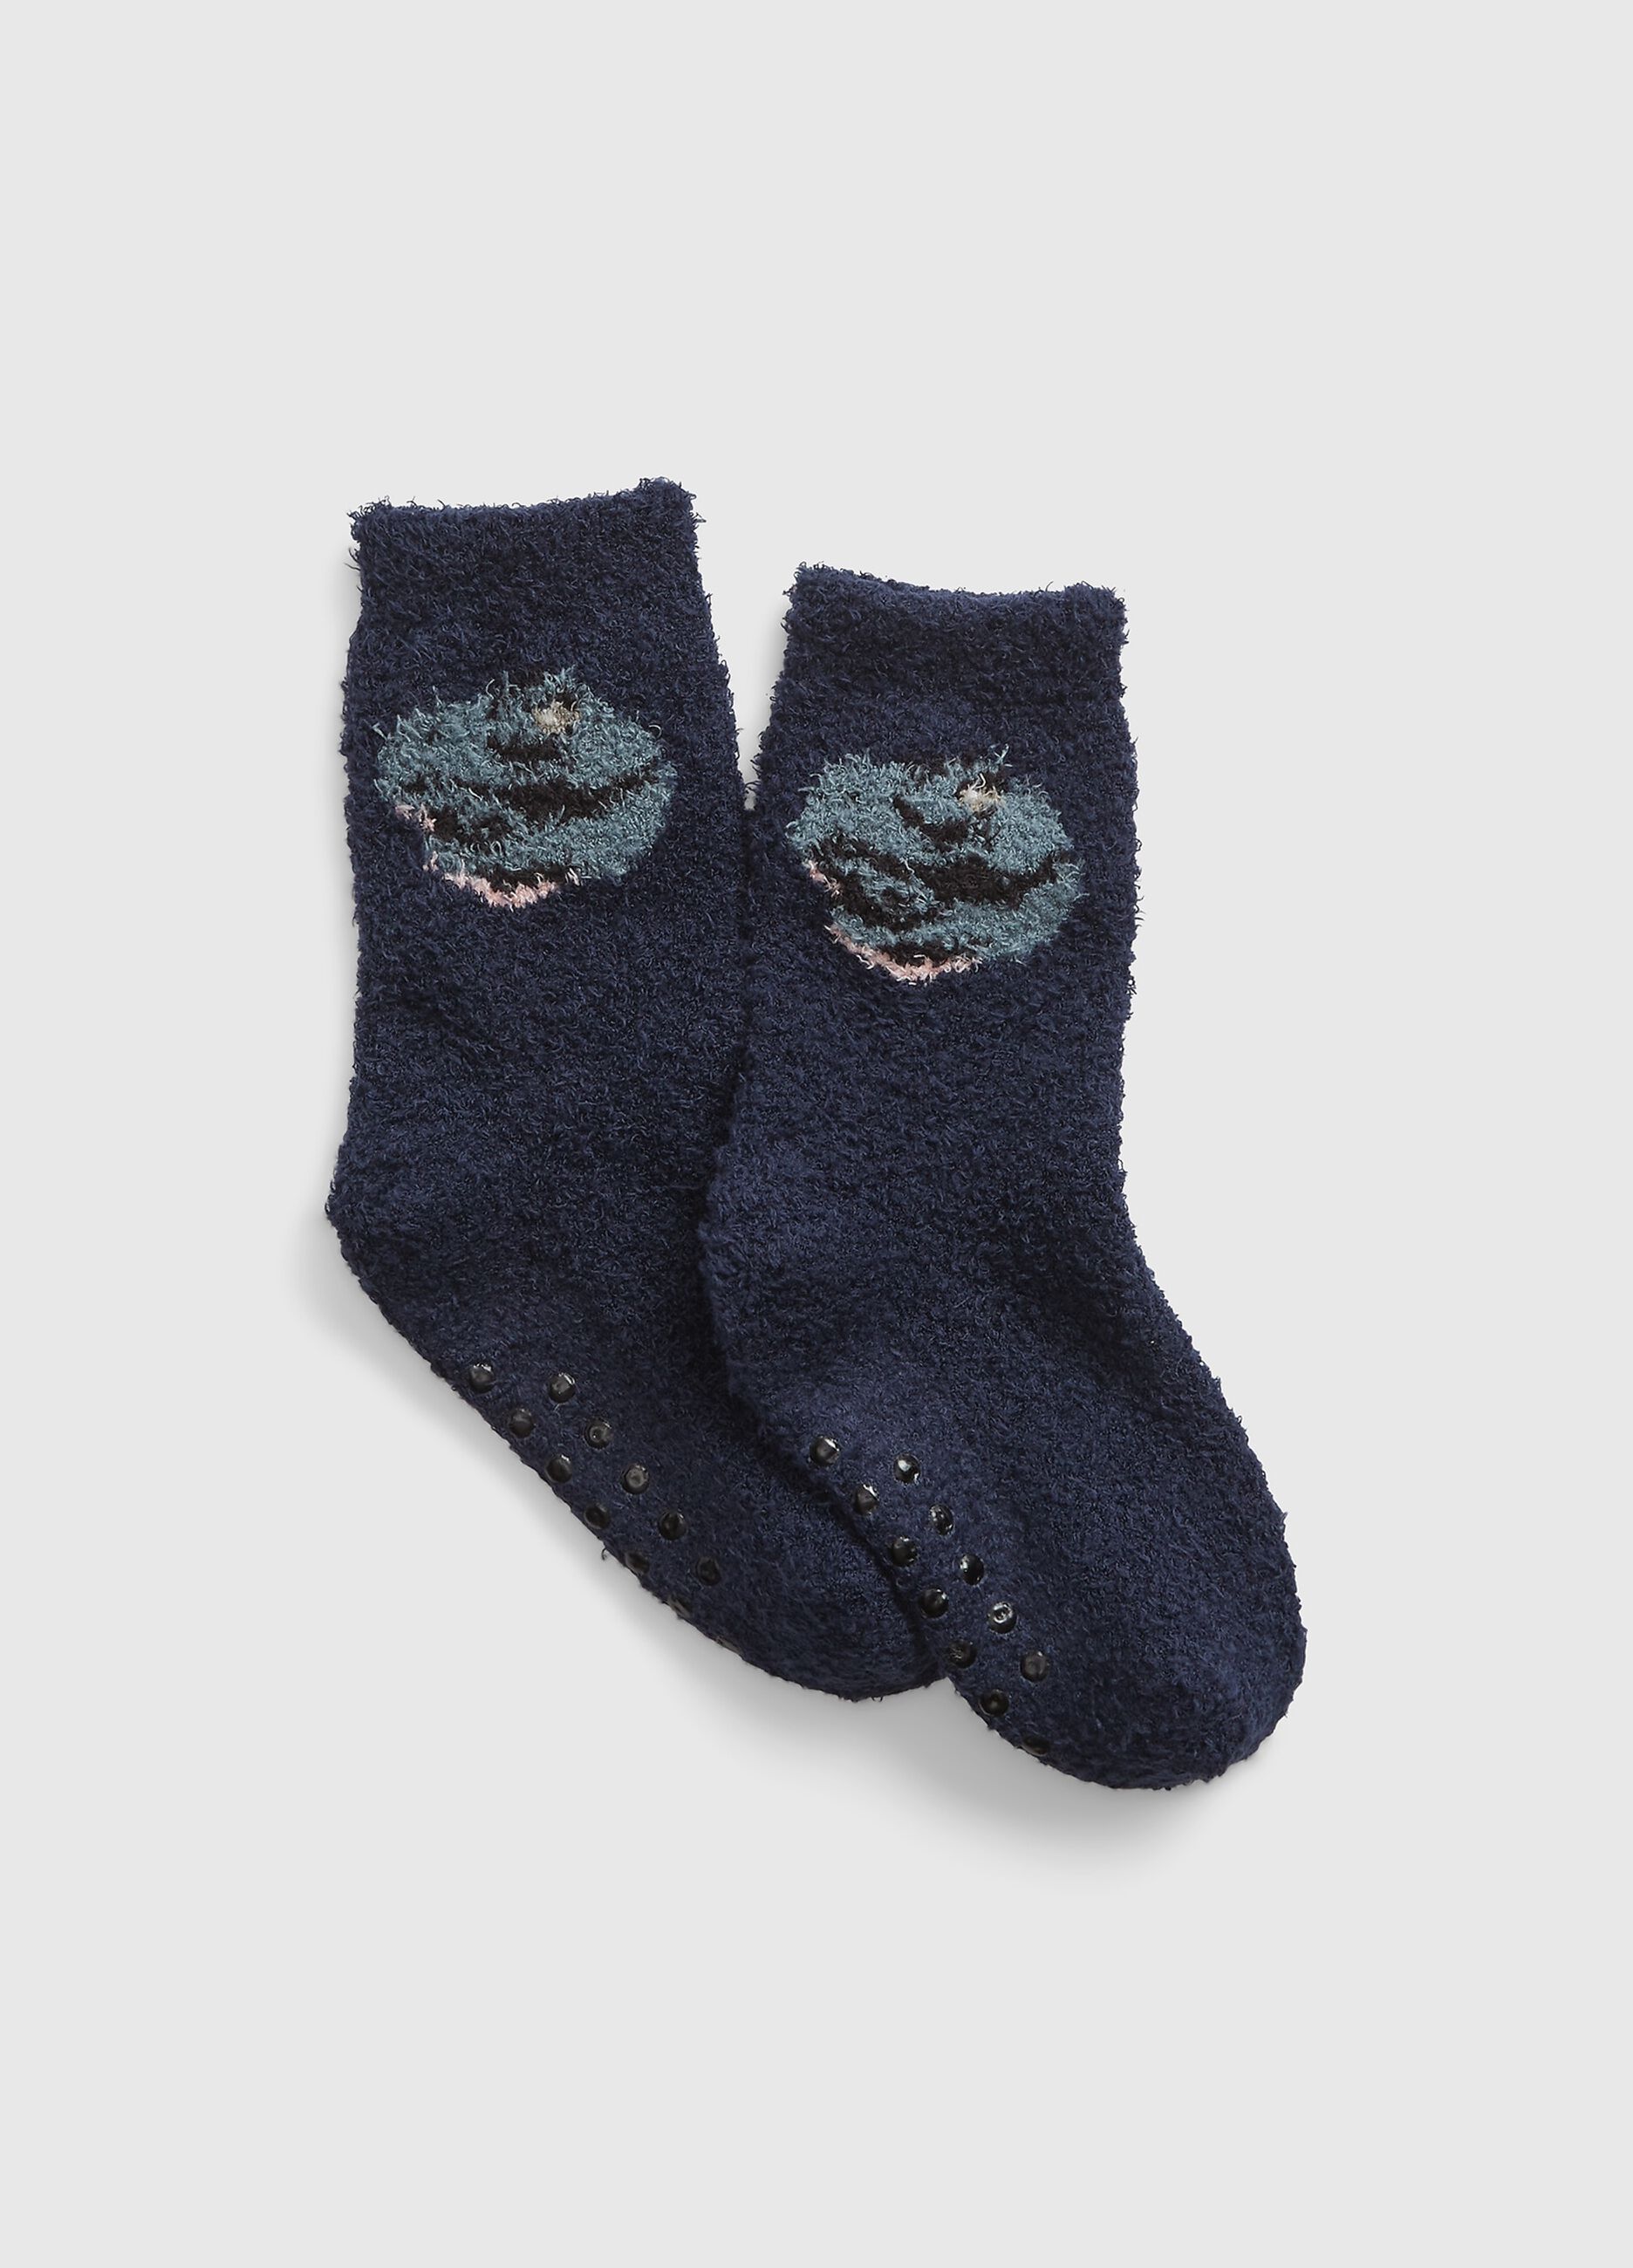 Warm, comfy slipper socks